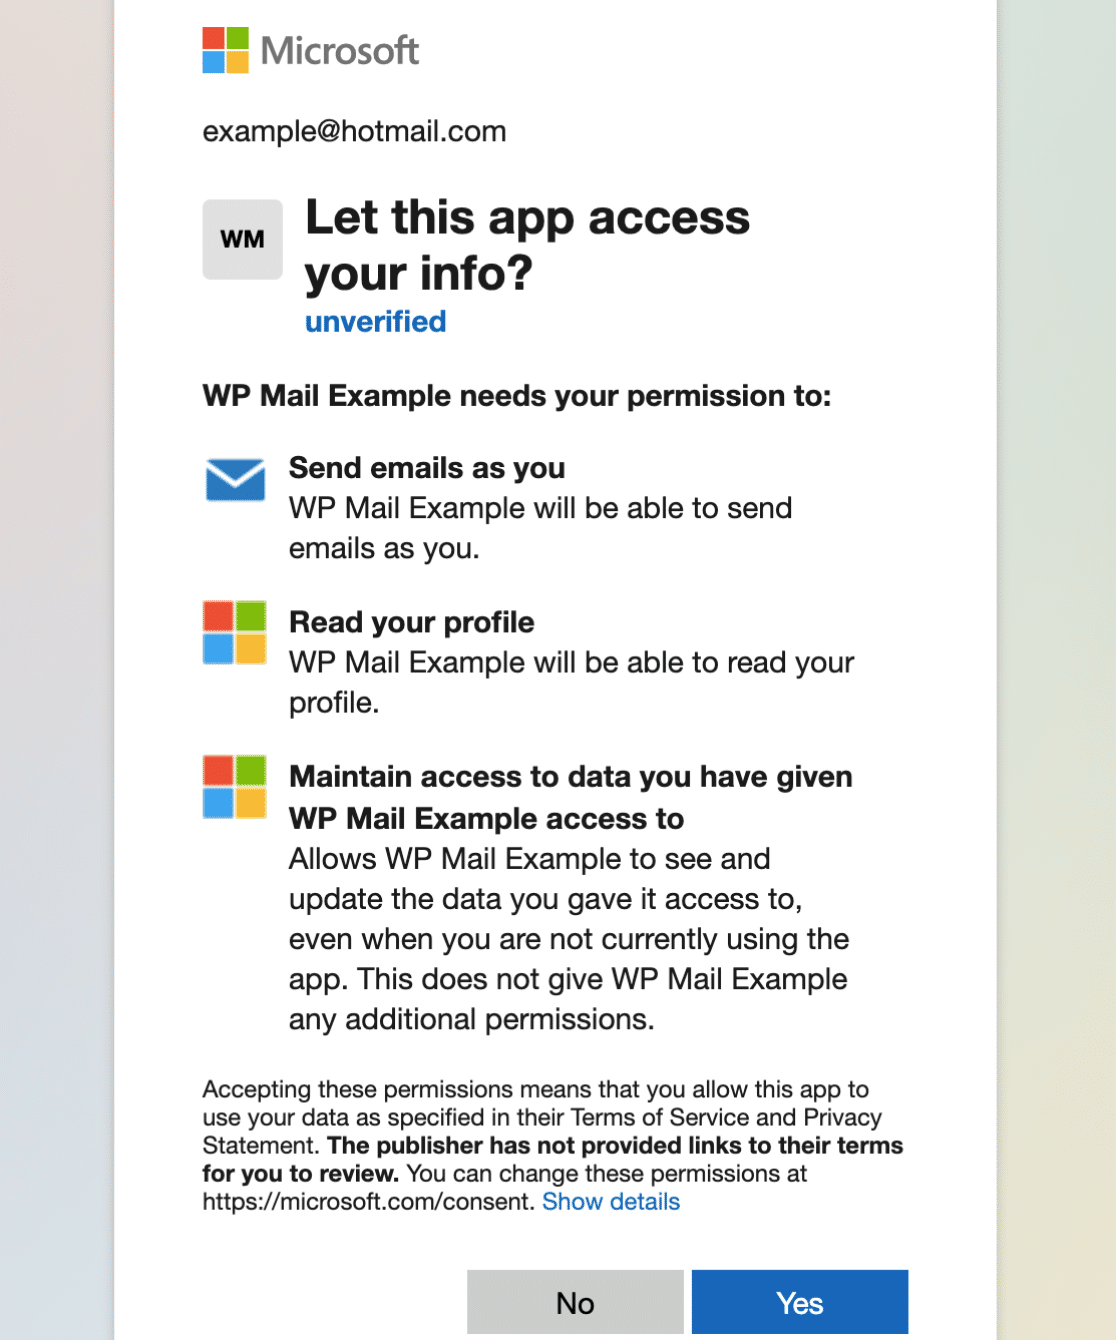 Microsoft permissions request form